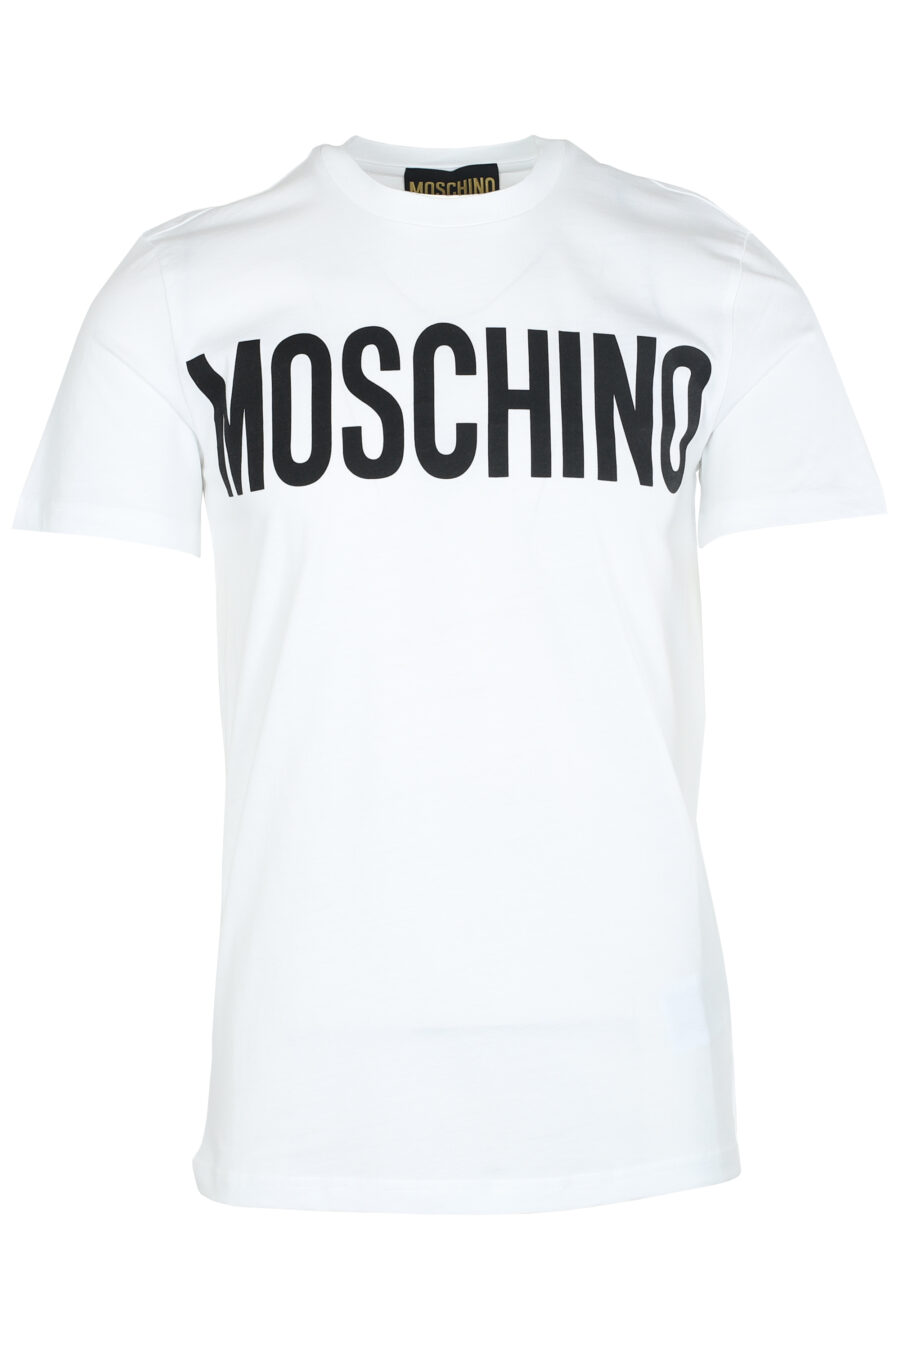 T-shirt branca com maxilogue preto - IMG 6172